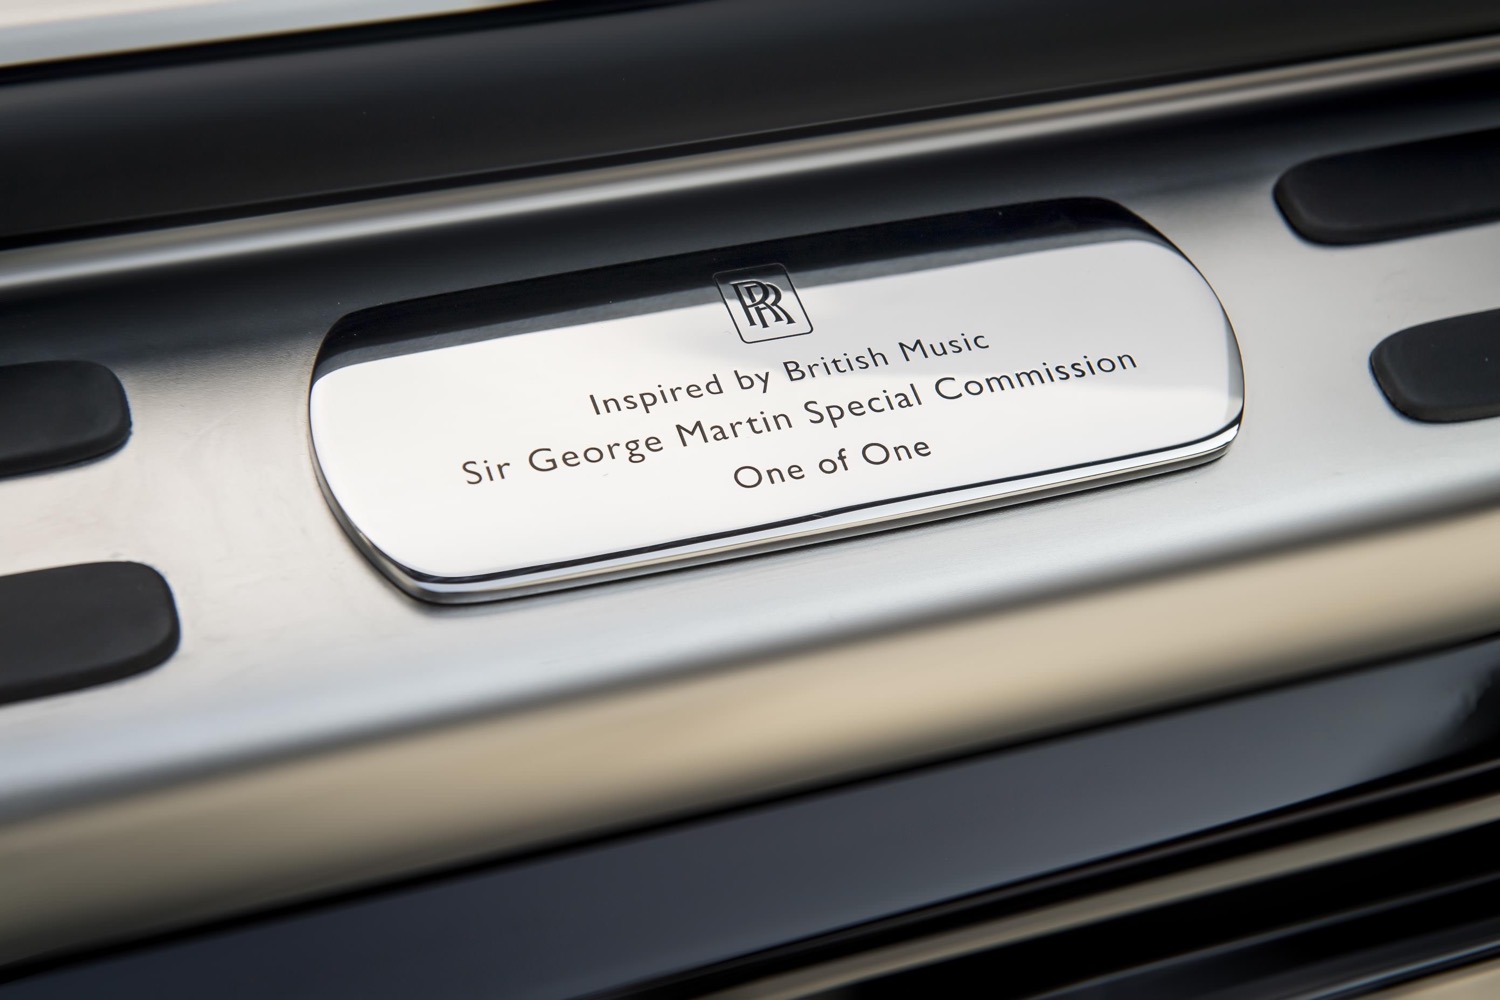 Rolls-Royce Wraith "Inspired by British Music" (George Martin)